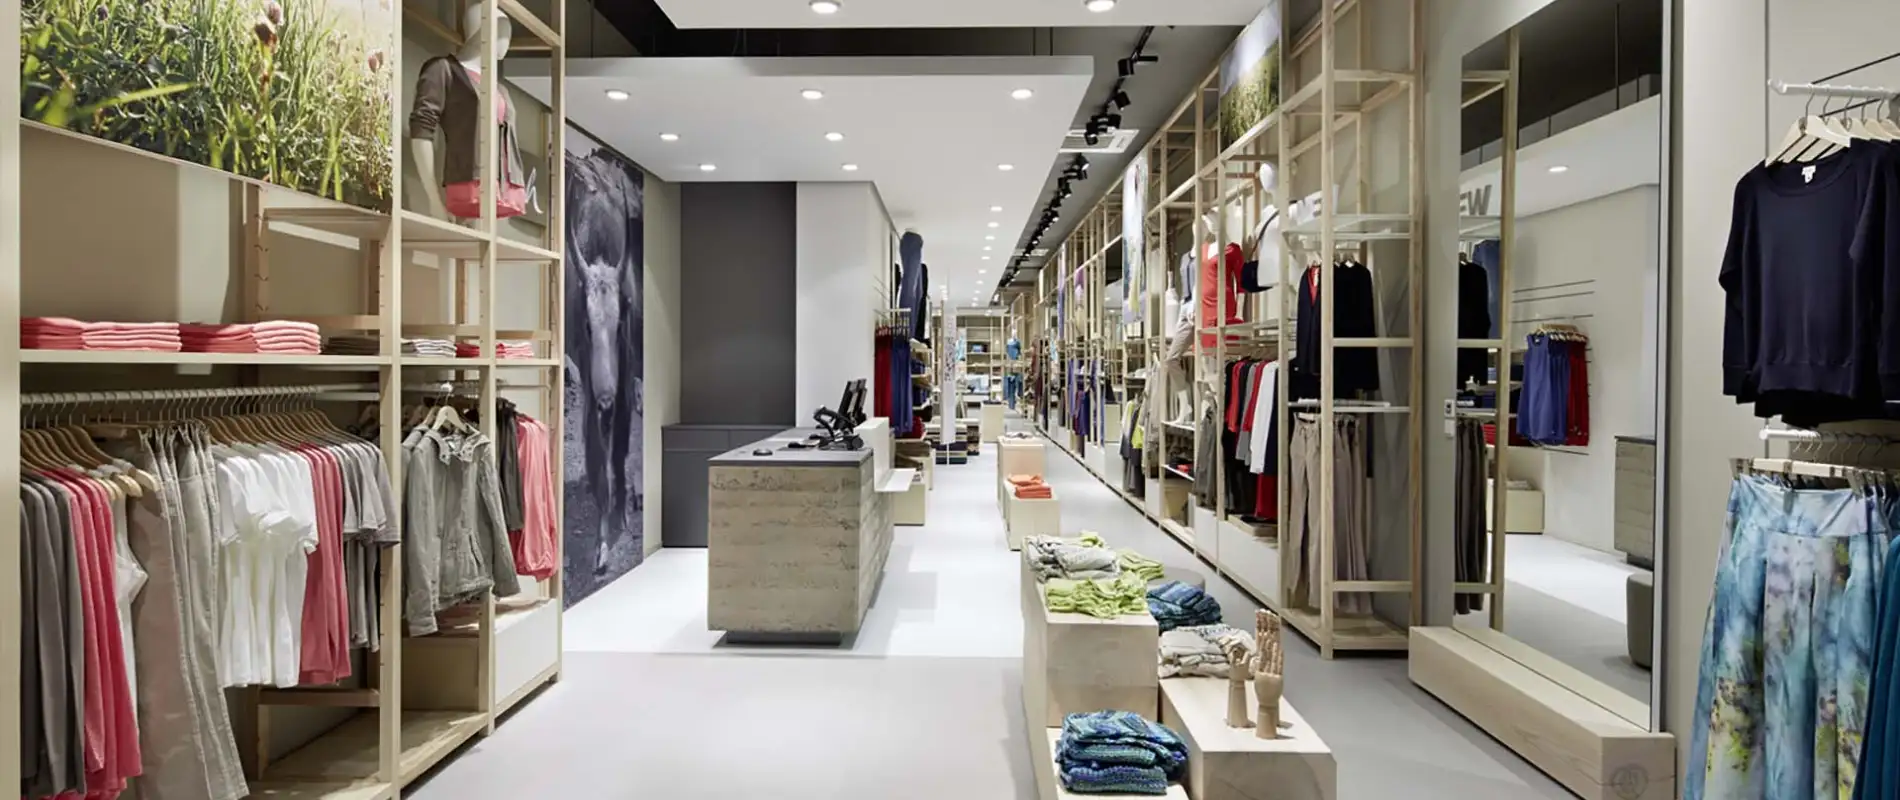 Monobrand concept - nature fashion brand - design and realisation - Hessnatur Frankfurt - store overview